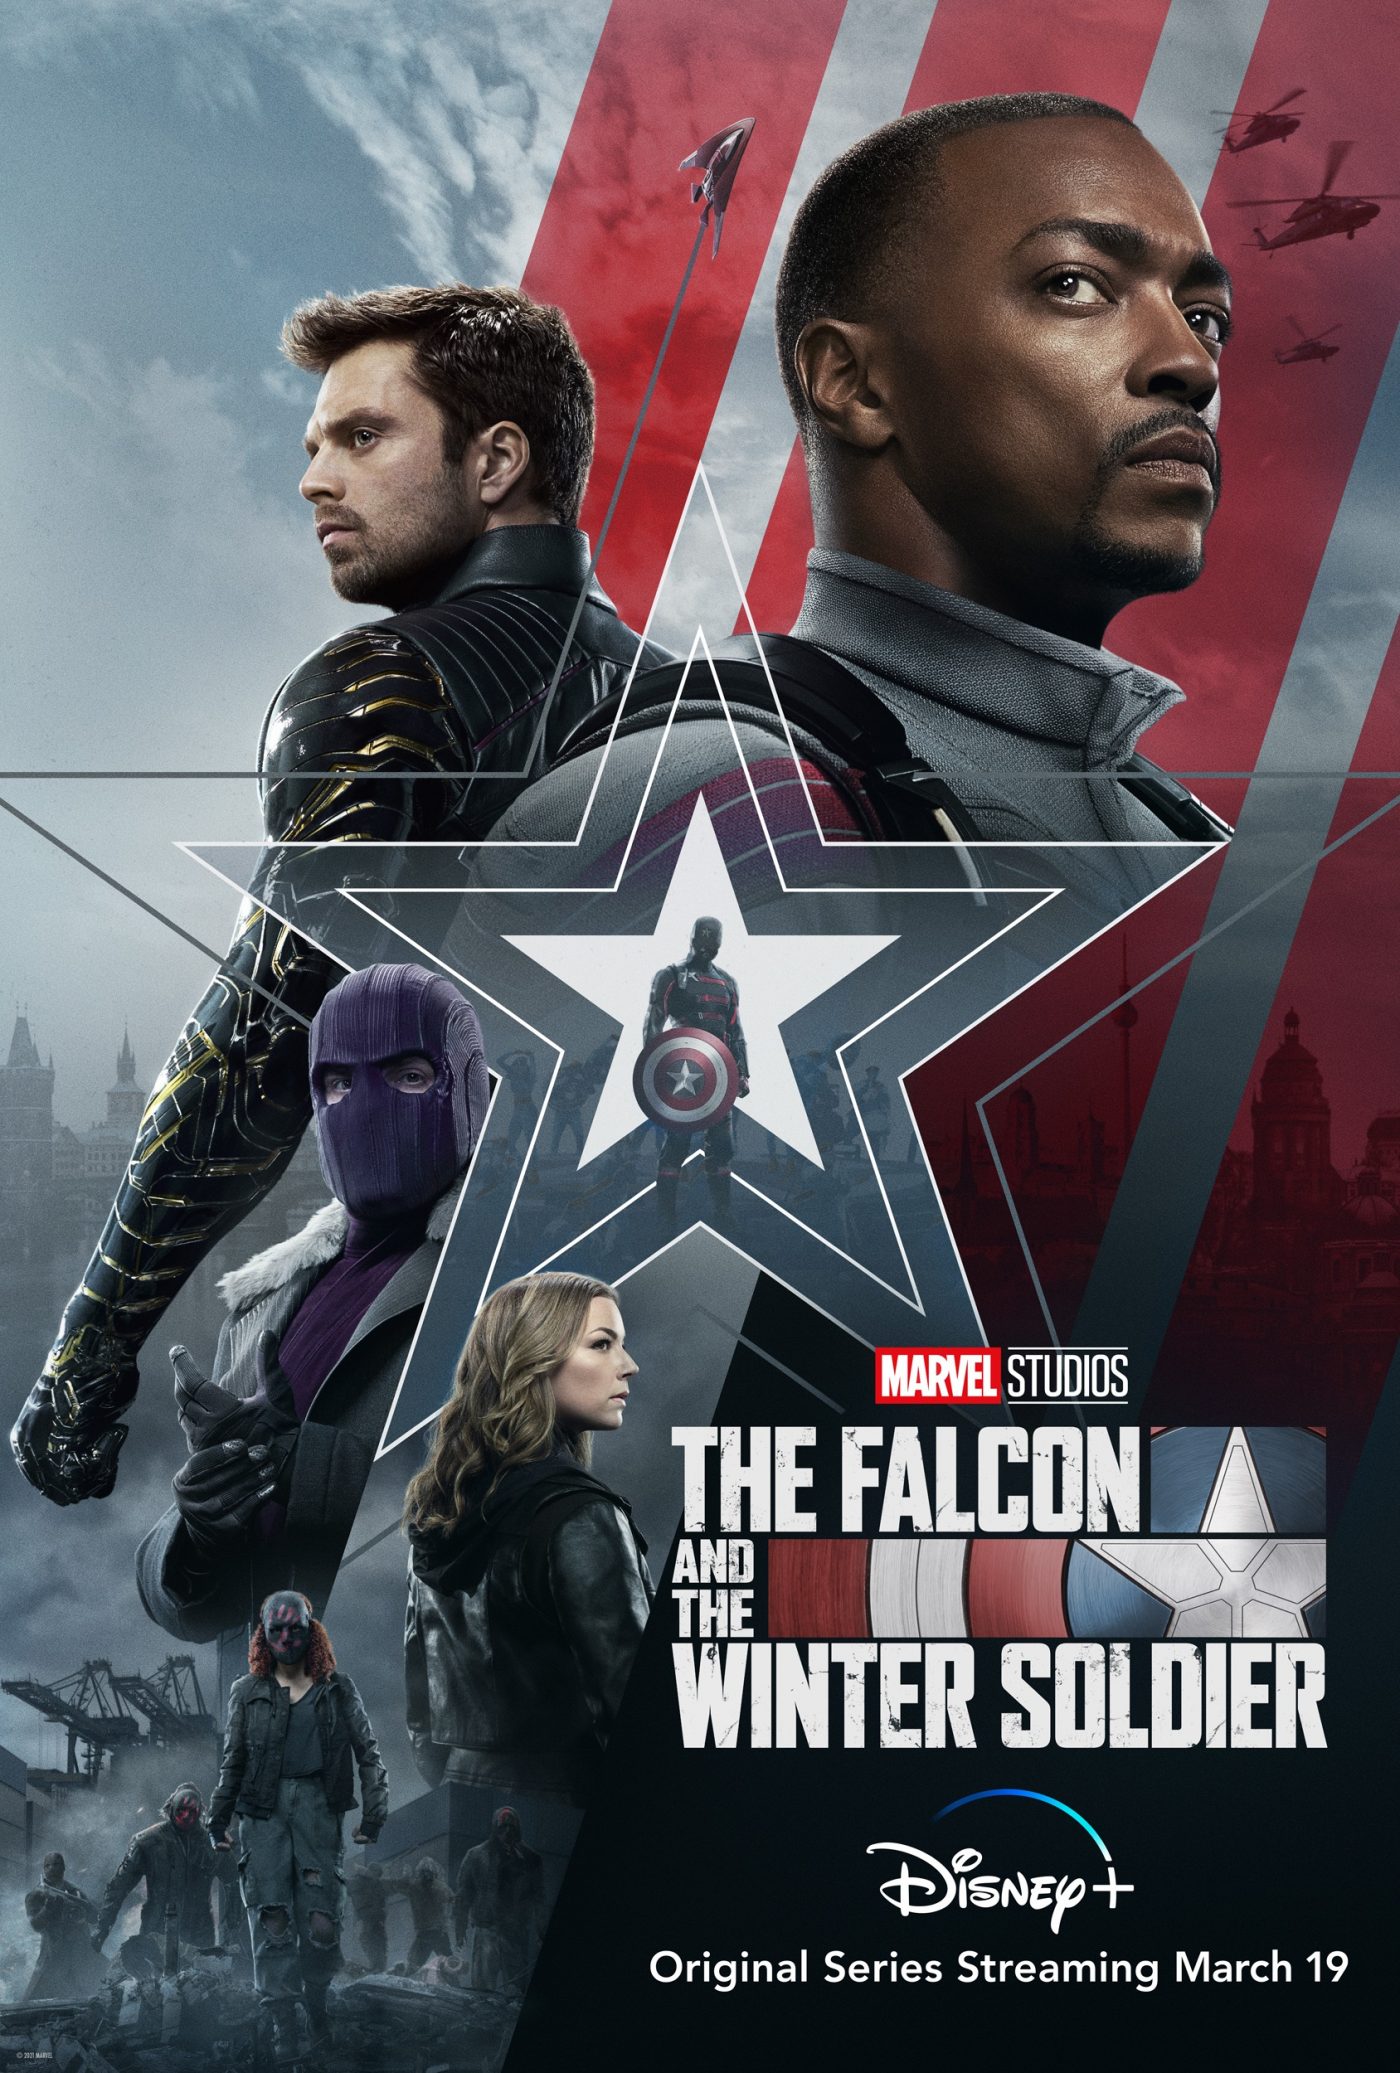 FALCON winter soldier poster